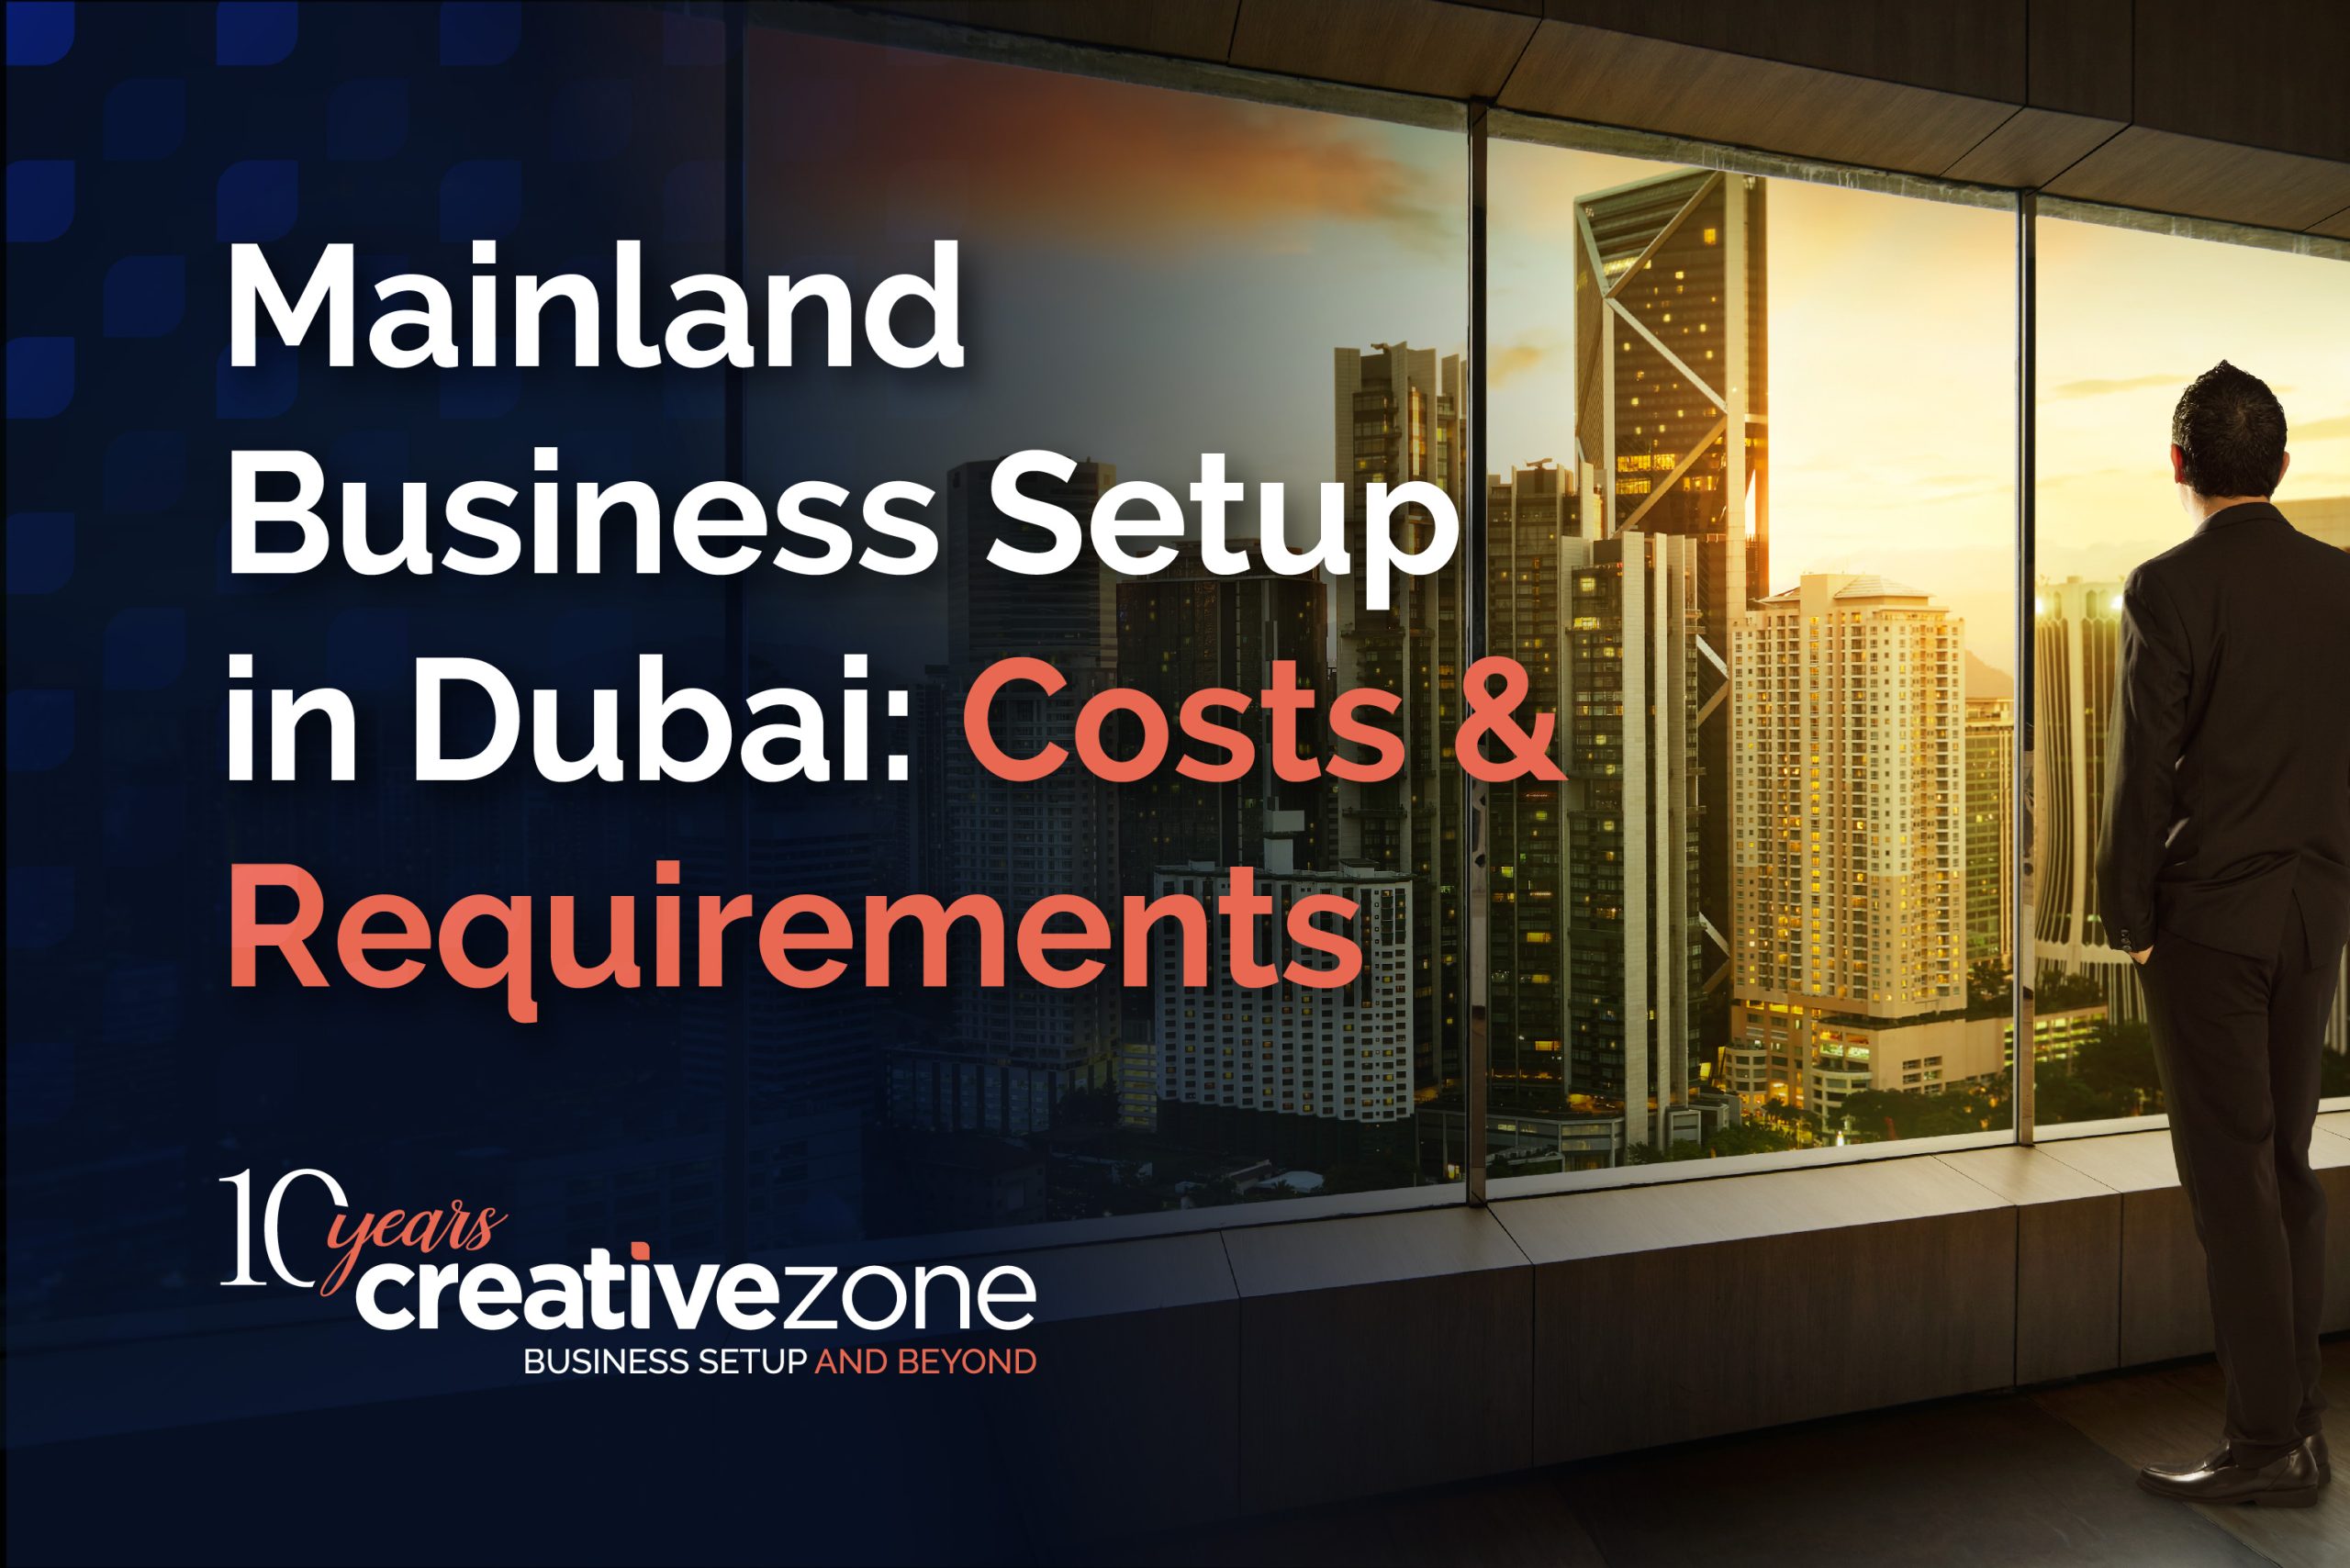 Dubai Company Expert Services